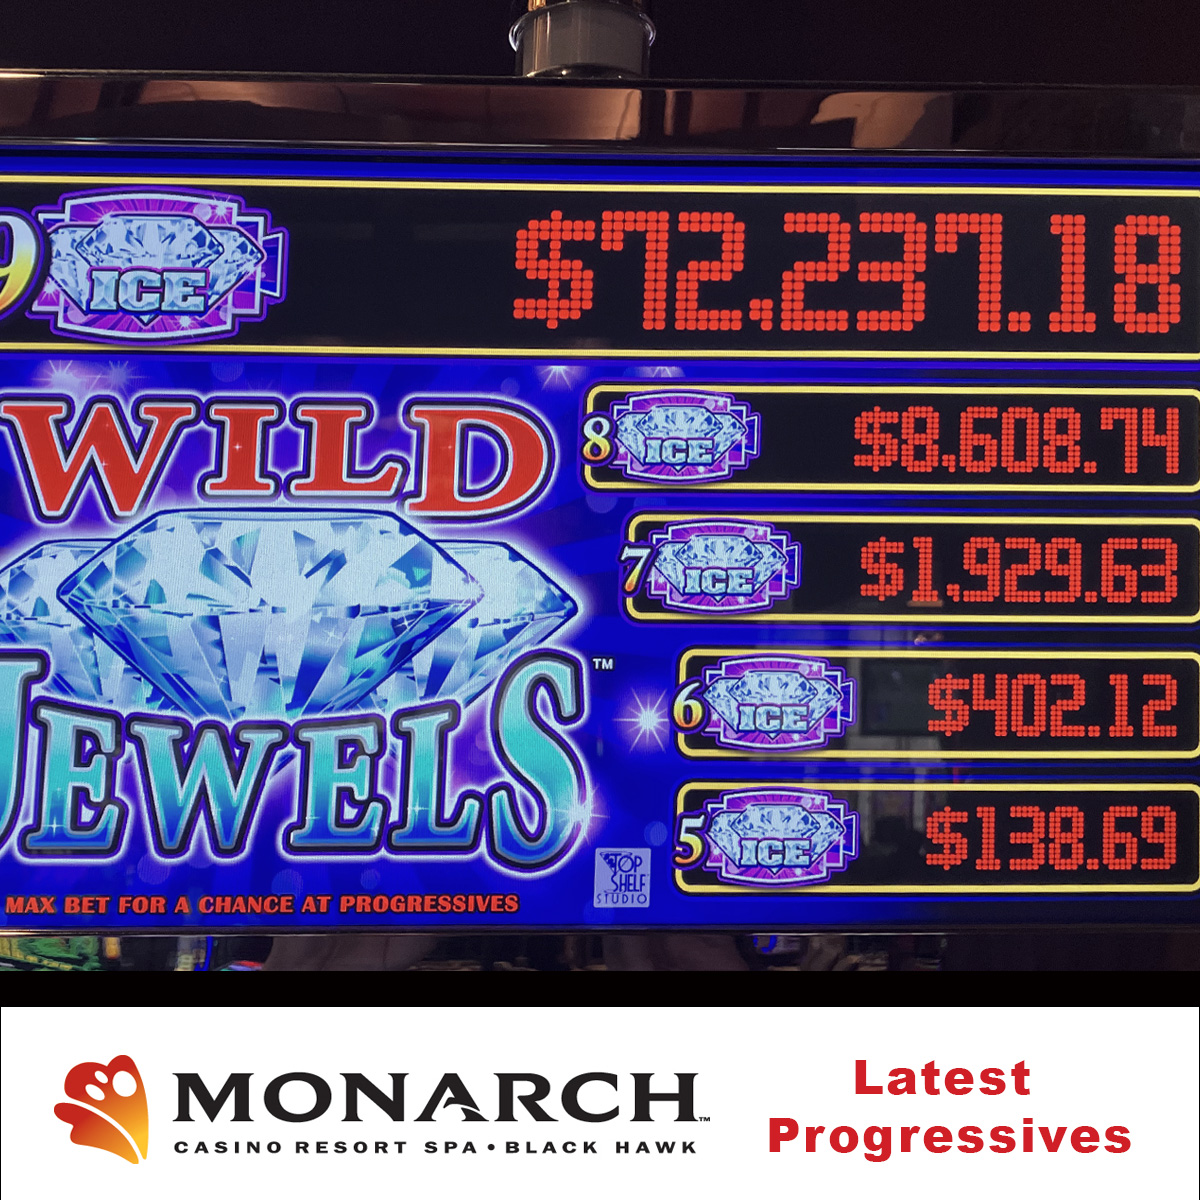 Slot Progressives - Double Diamond - $88,914.80